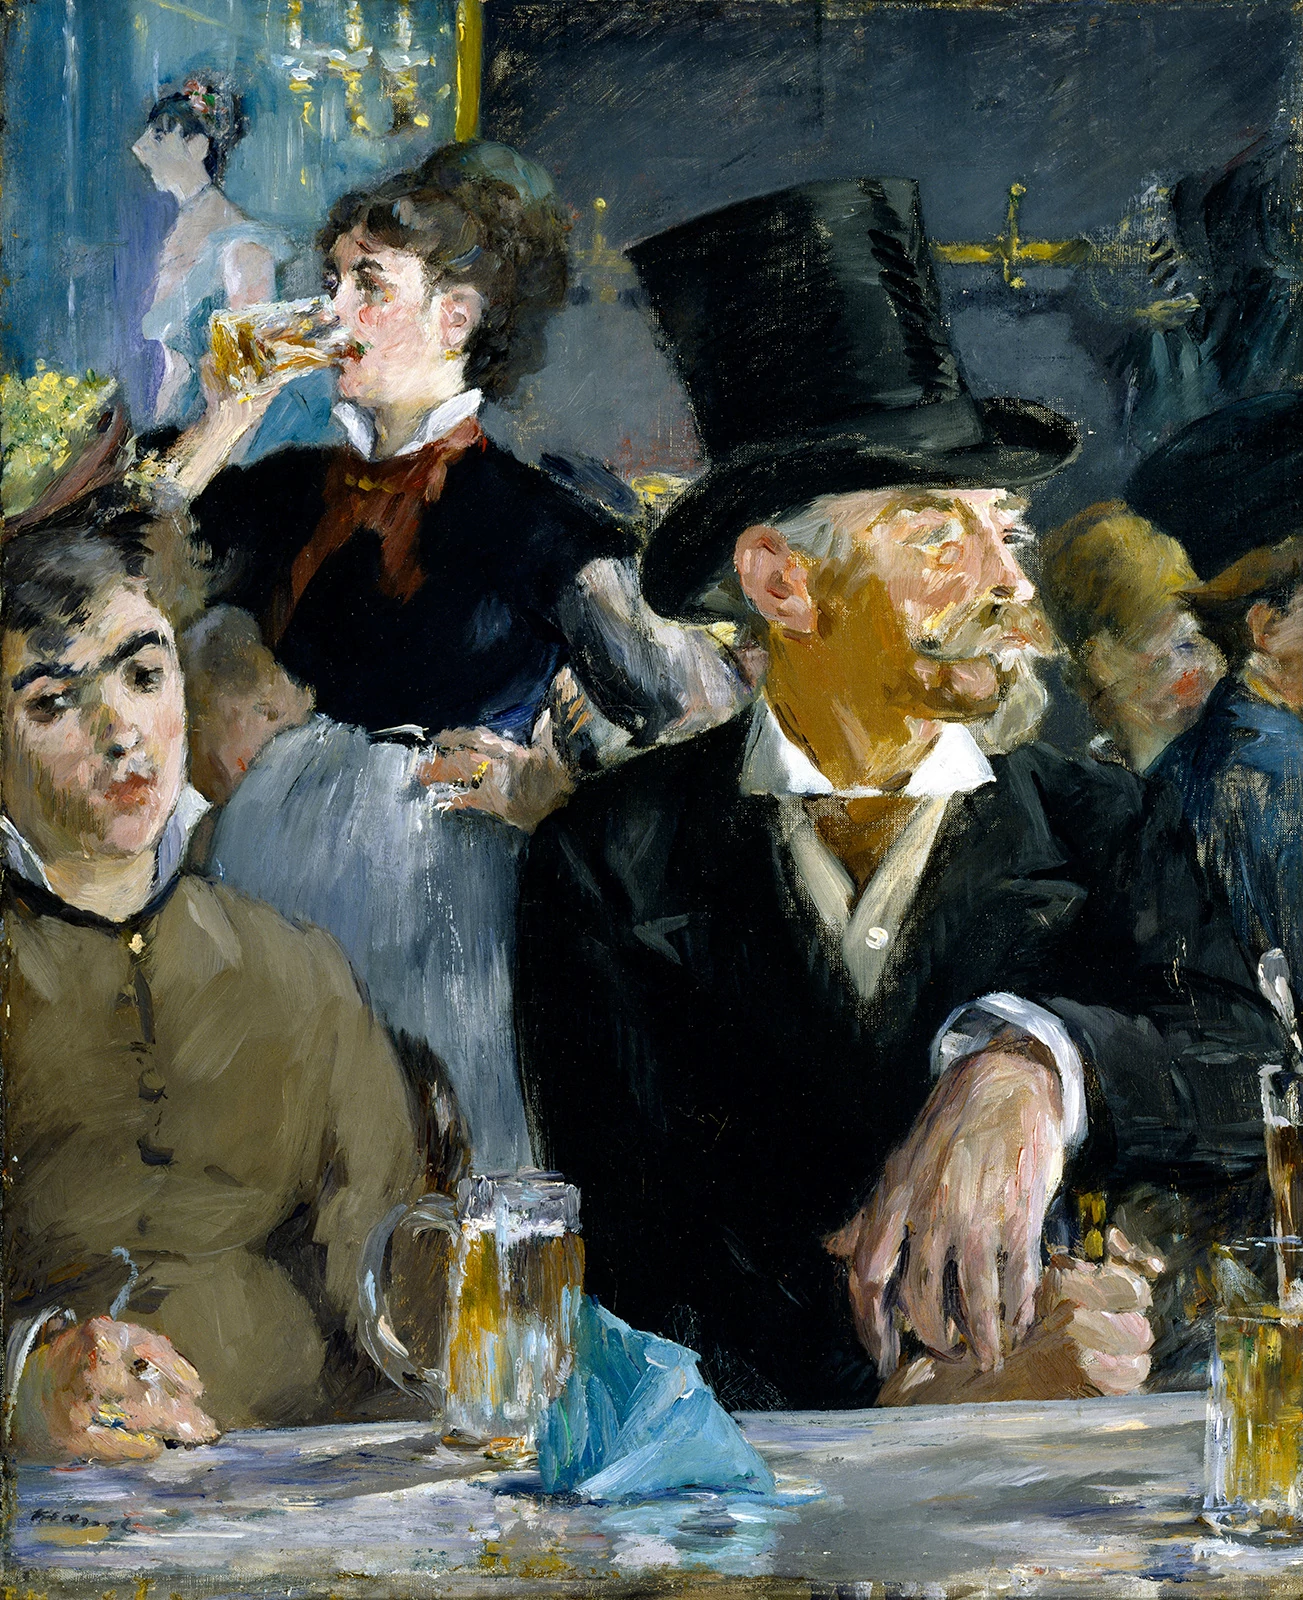 Édouard Manet, The Artists